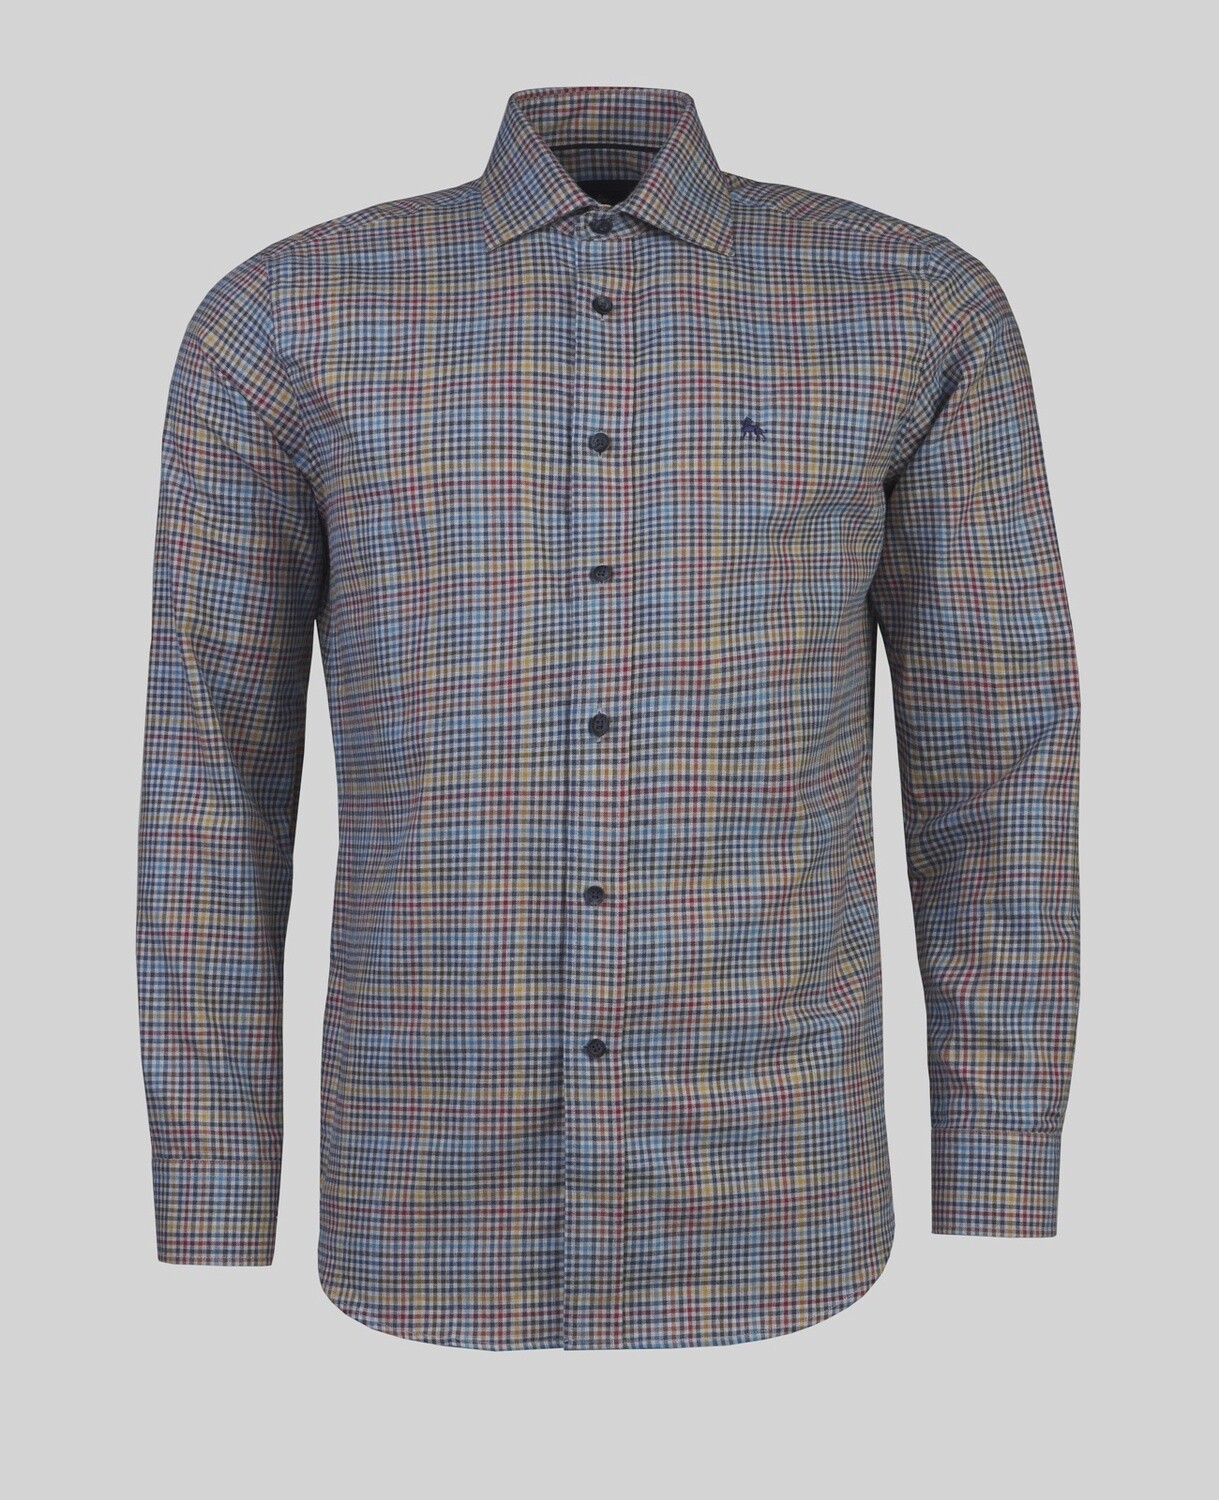 Tullagh Shirt - Multicoloured Check